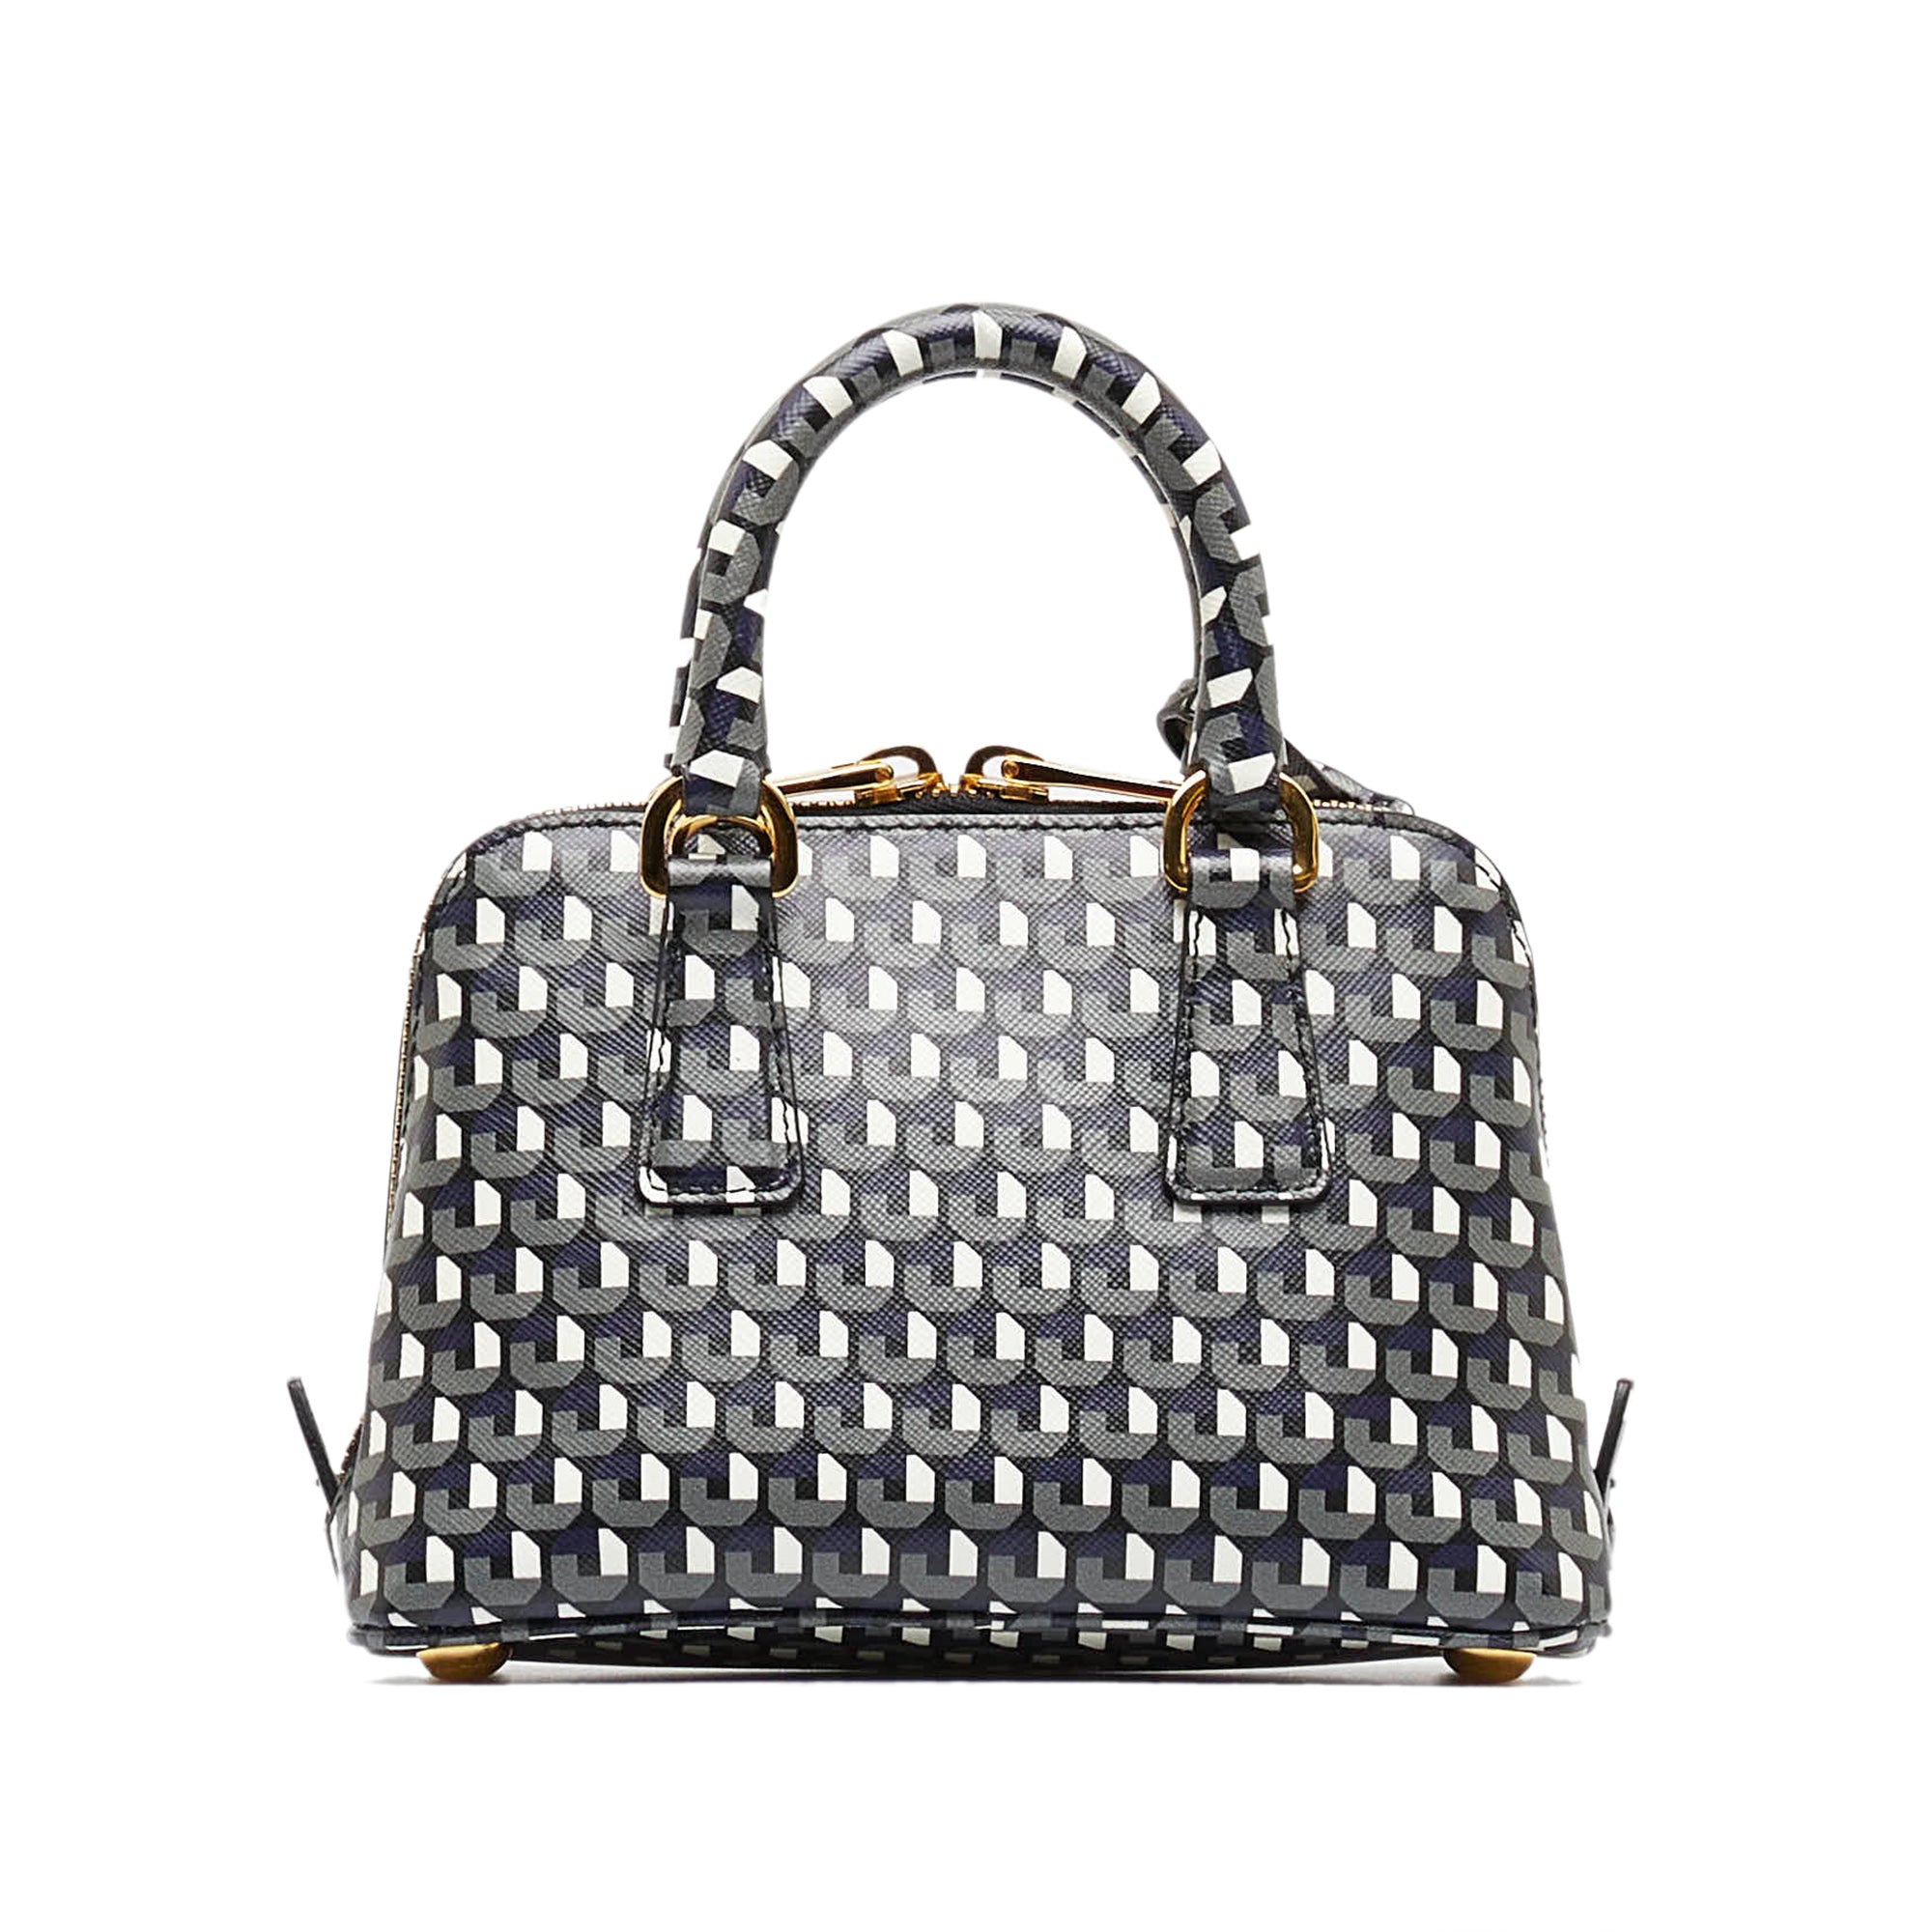 Prada - Authenticated Promenade Handbag - Leather Black Plain for Women, Very Good Condition